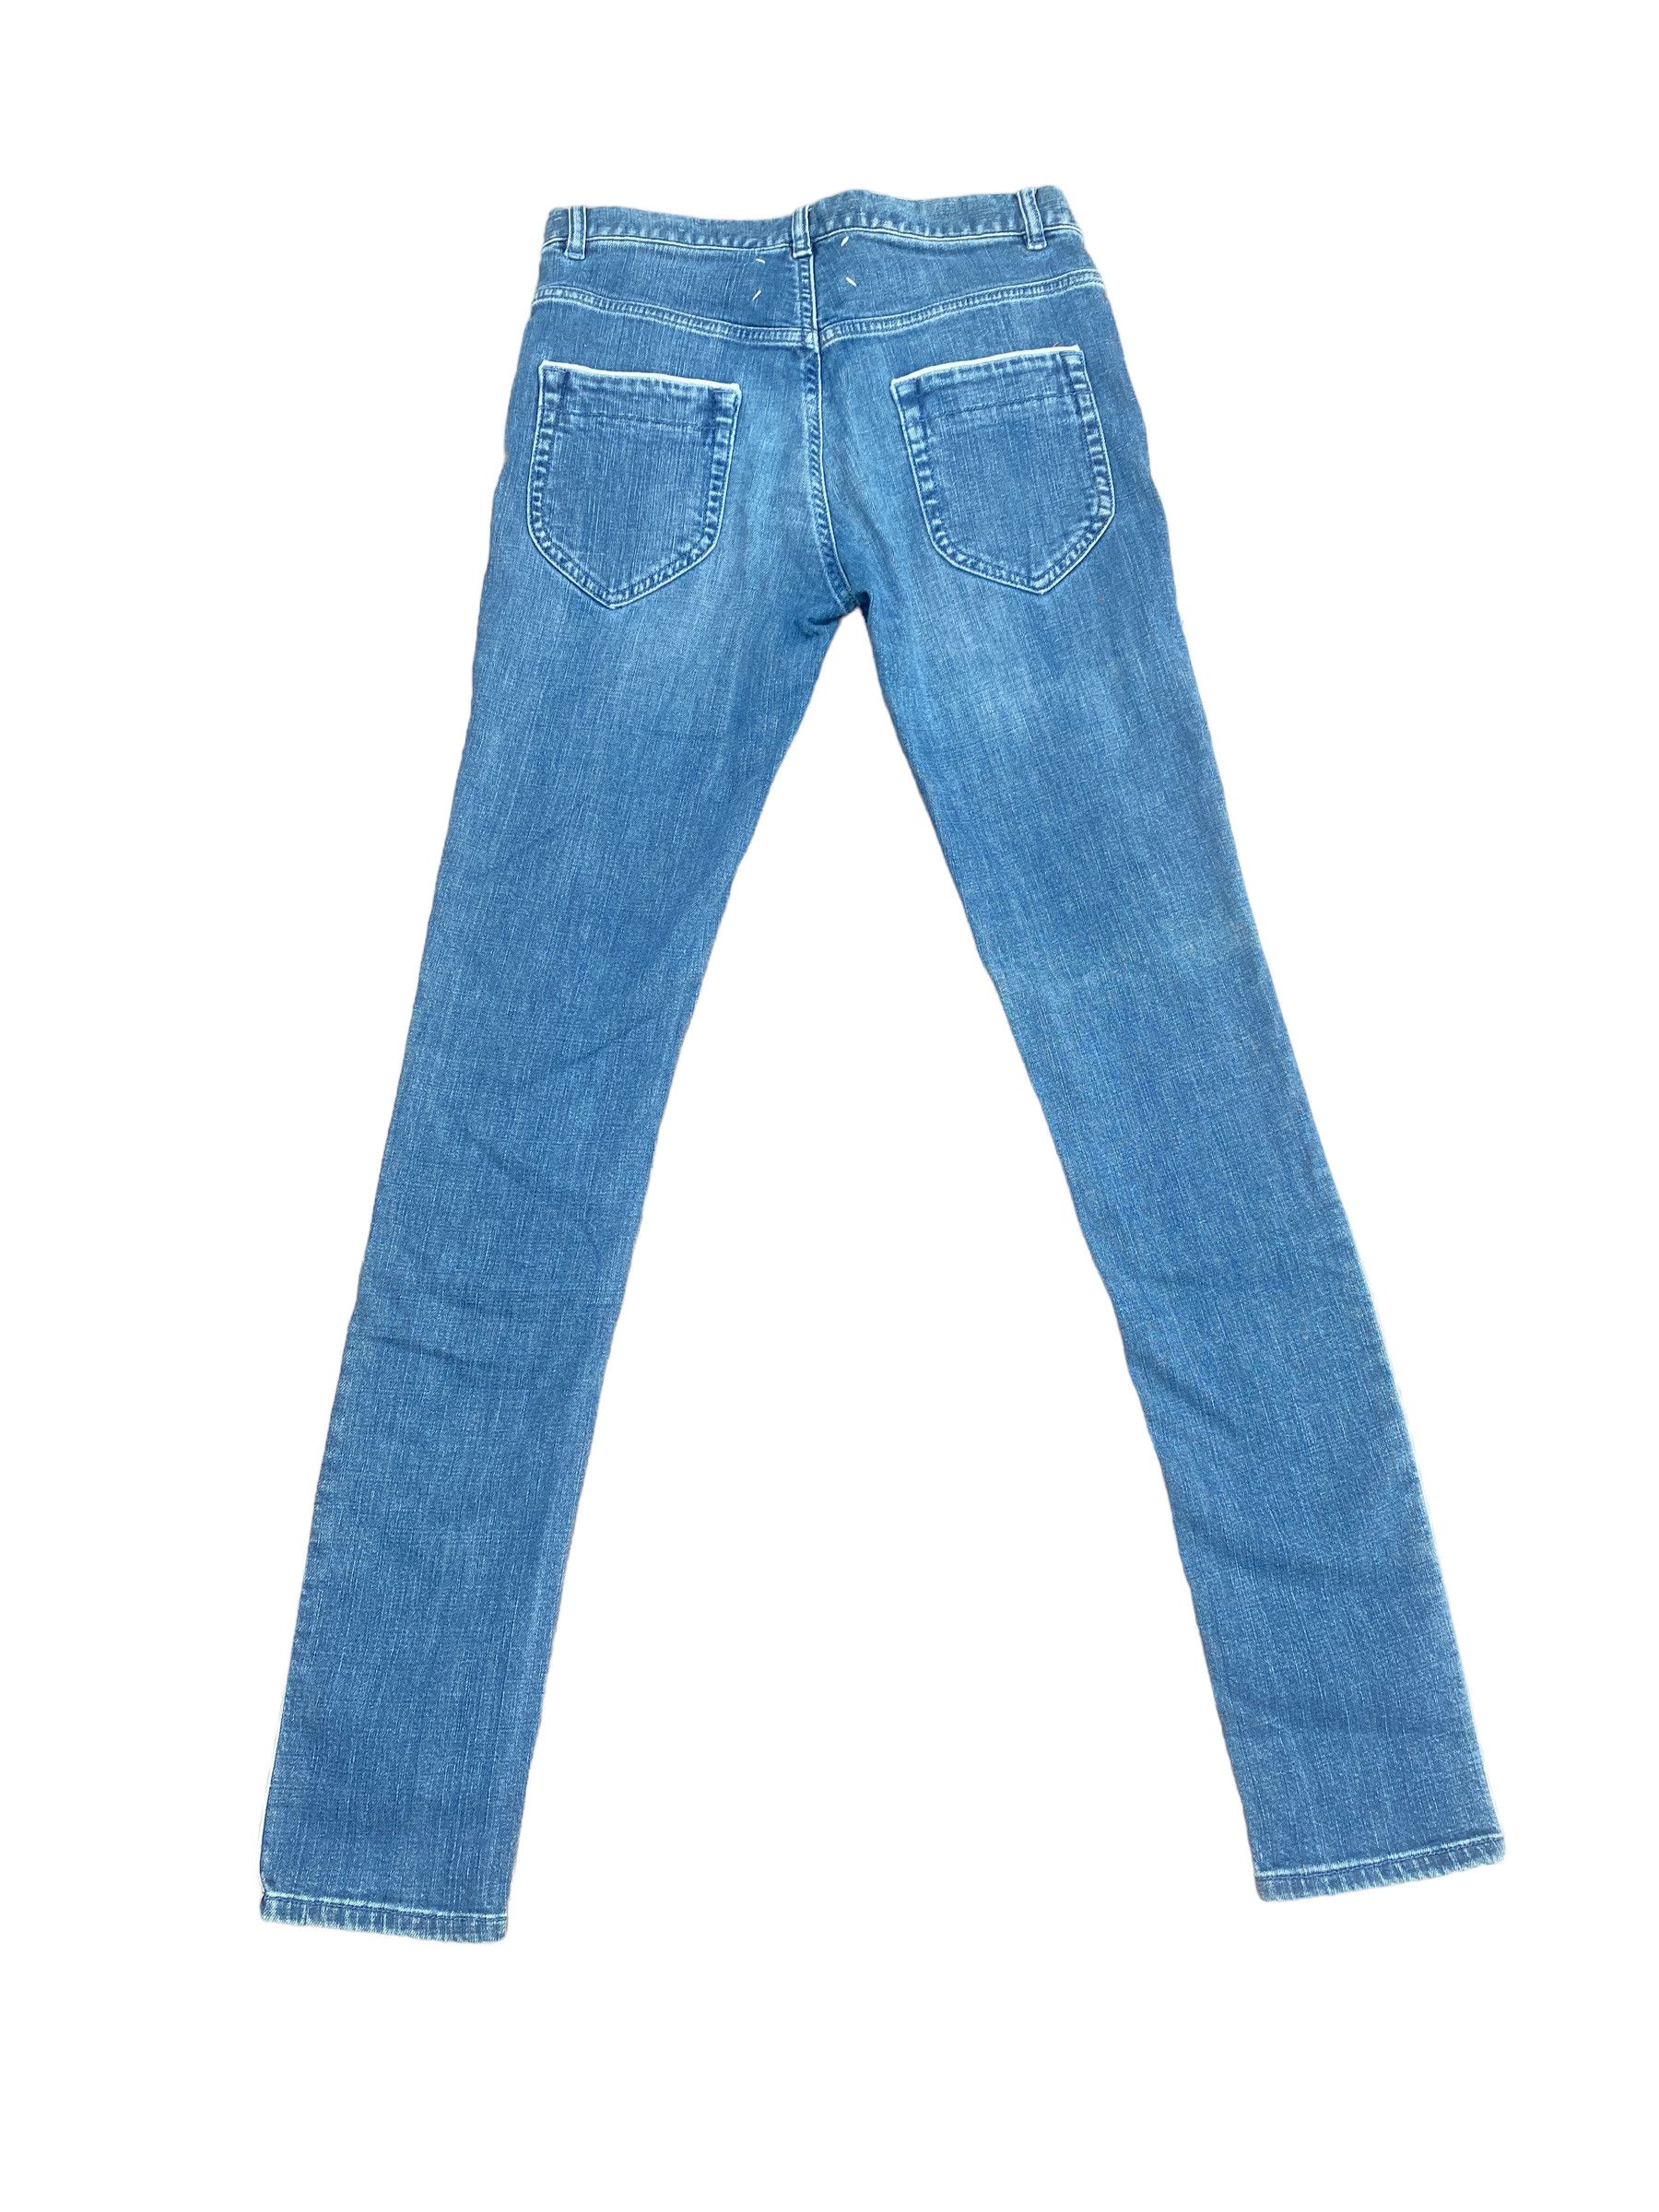 Maison Margiela SS 2008 Light blue denim jeans Size US 28 / EU 44 - 5 Thumbnail